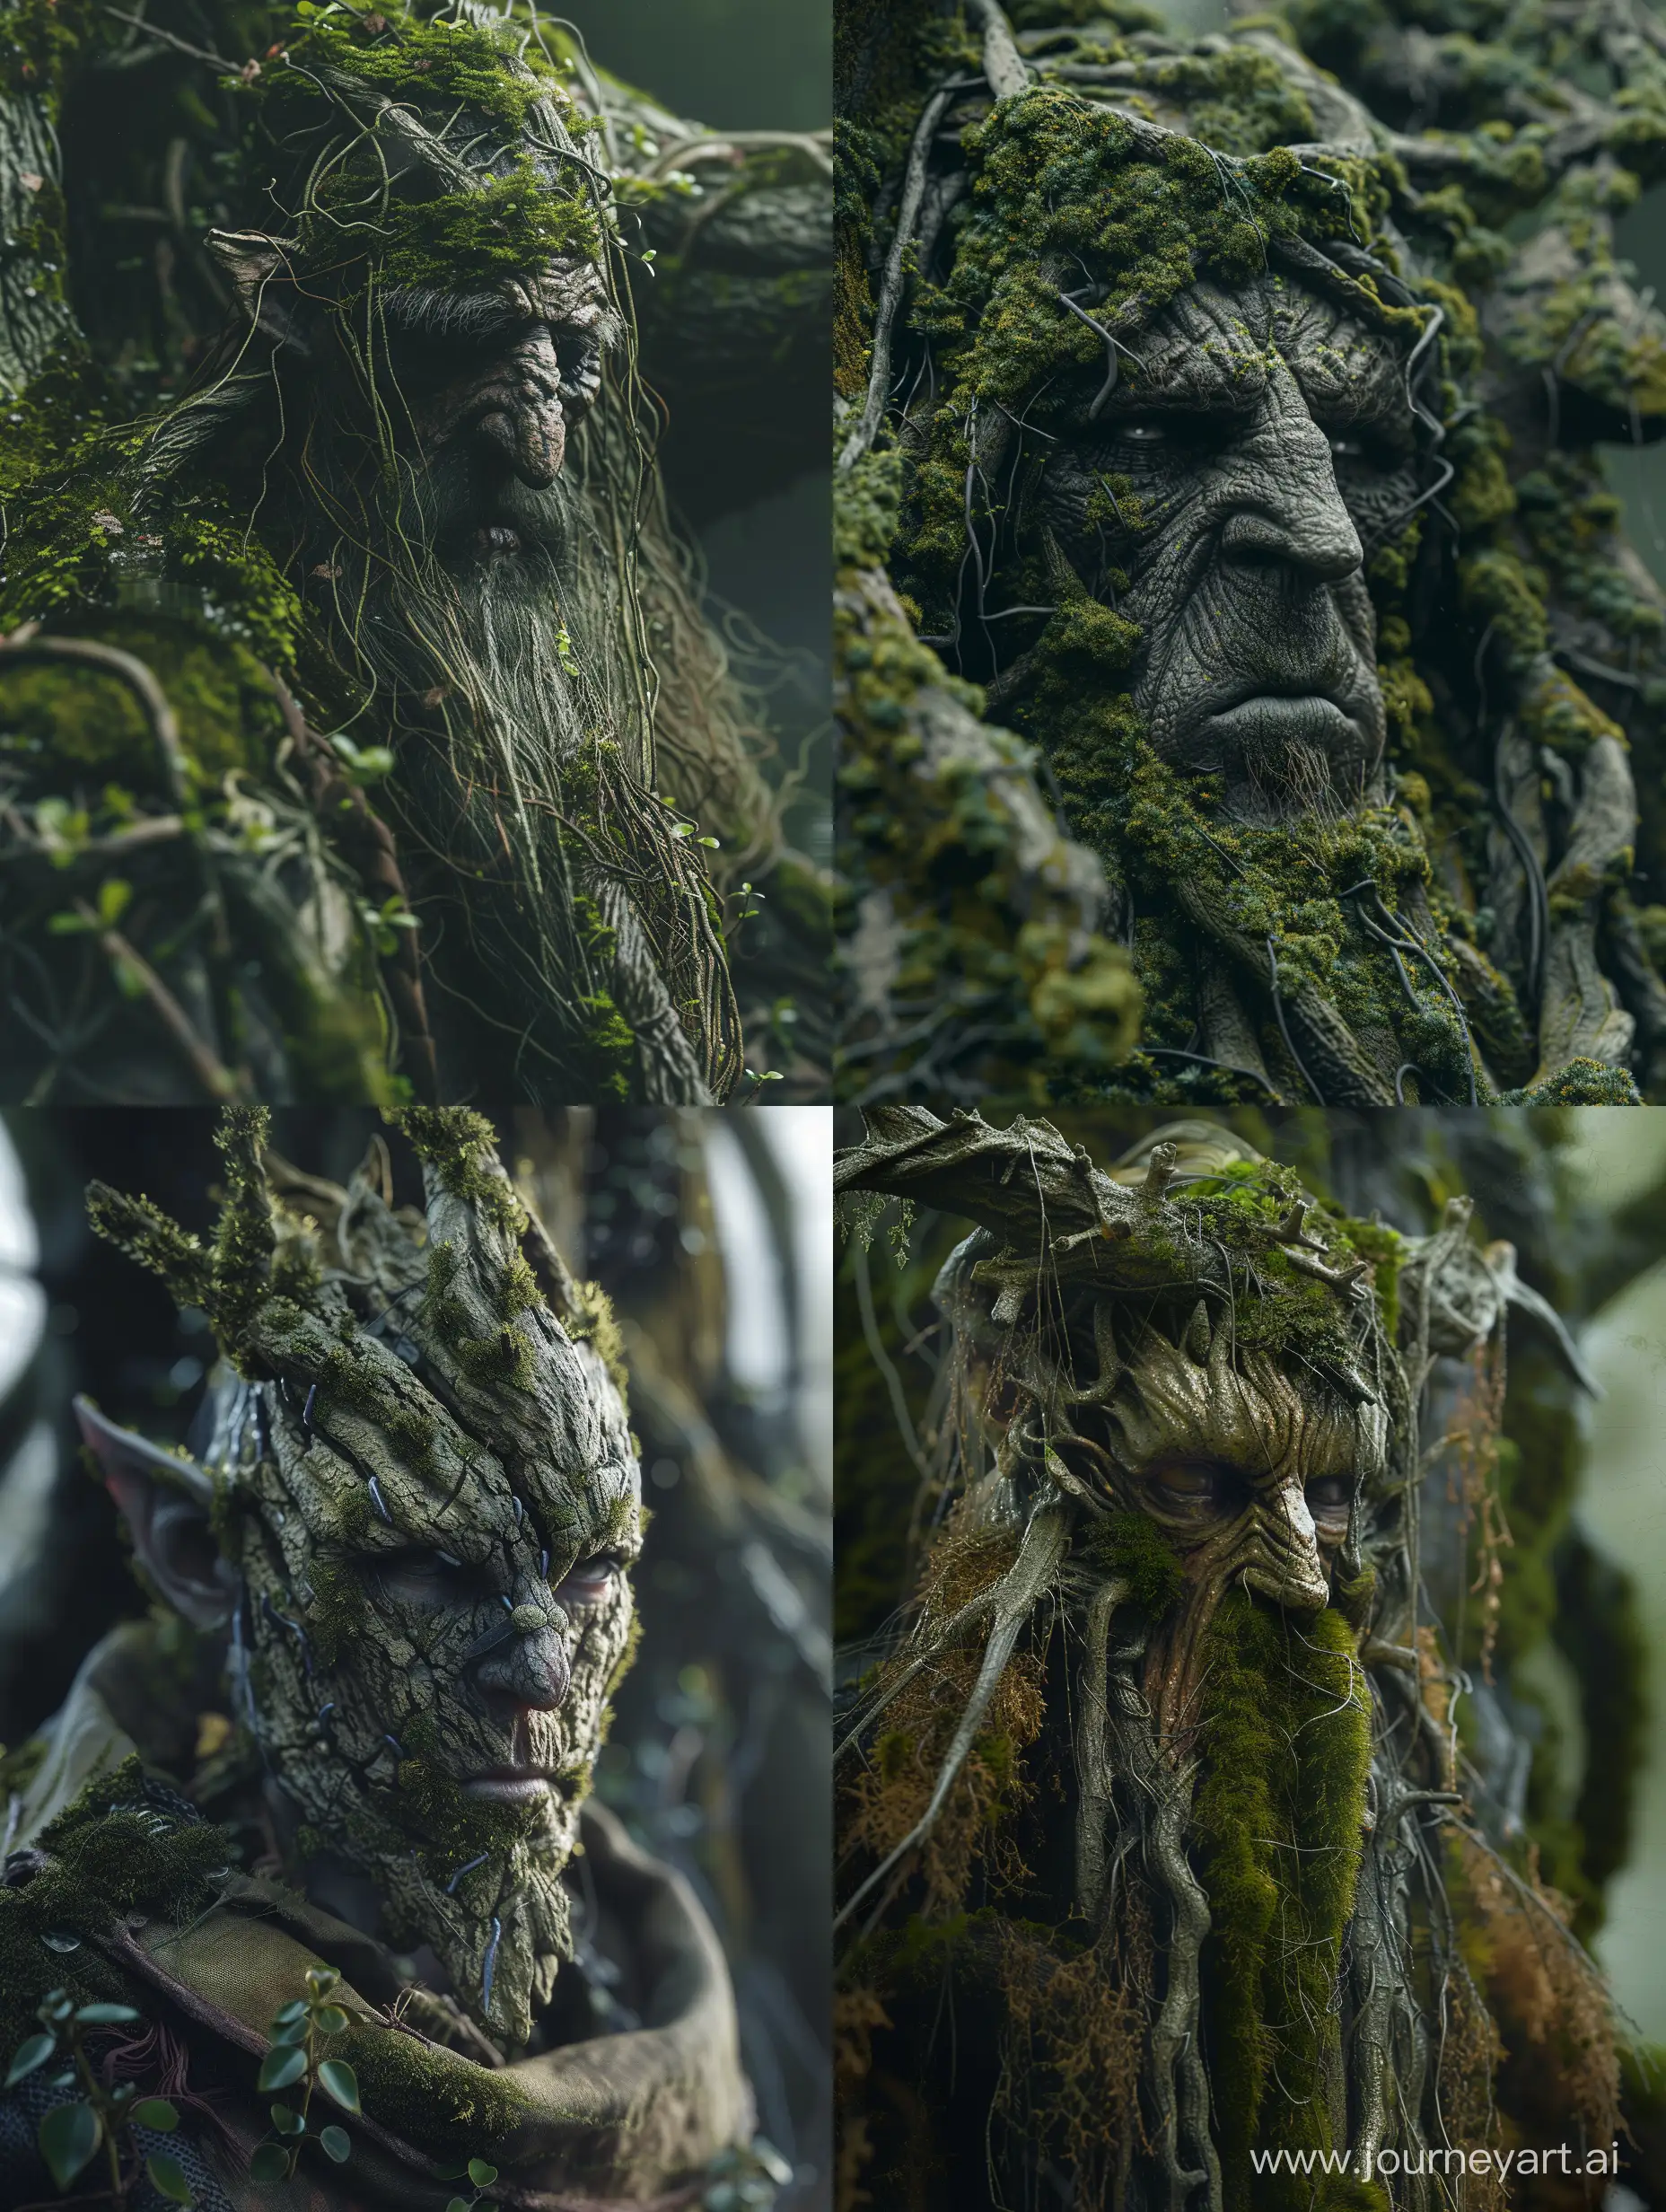 Terrifying-EntDruid-in-Dark-Fantasy-Swamp-4K-HighResolution-Photorealistic-Image